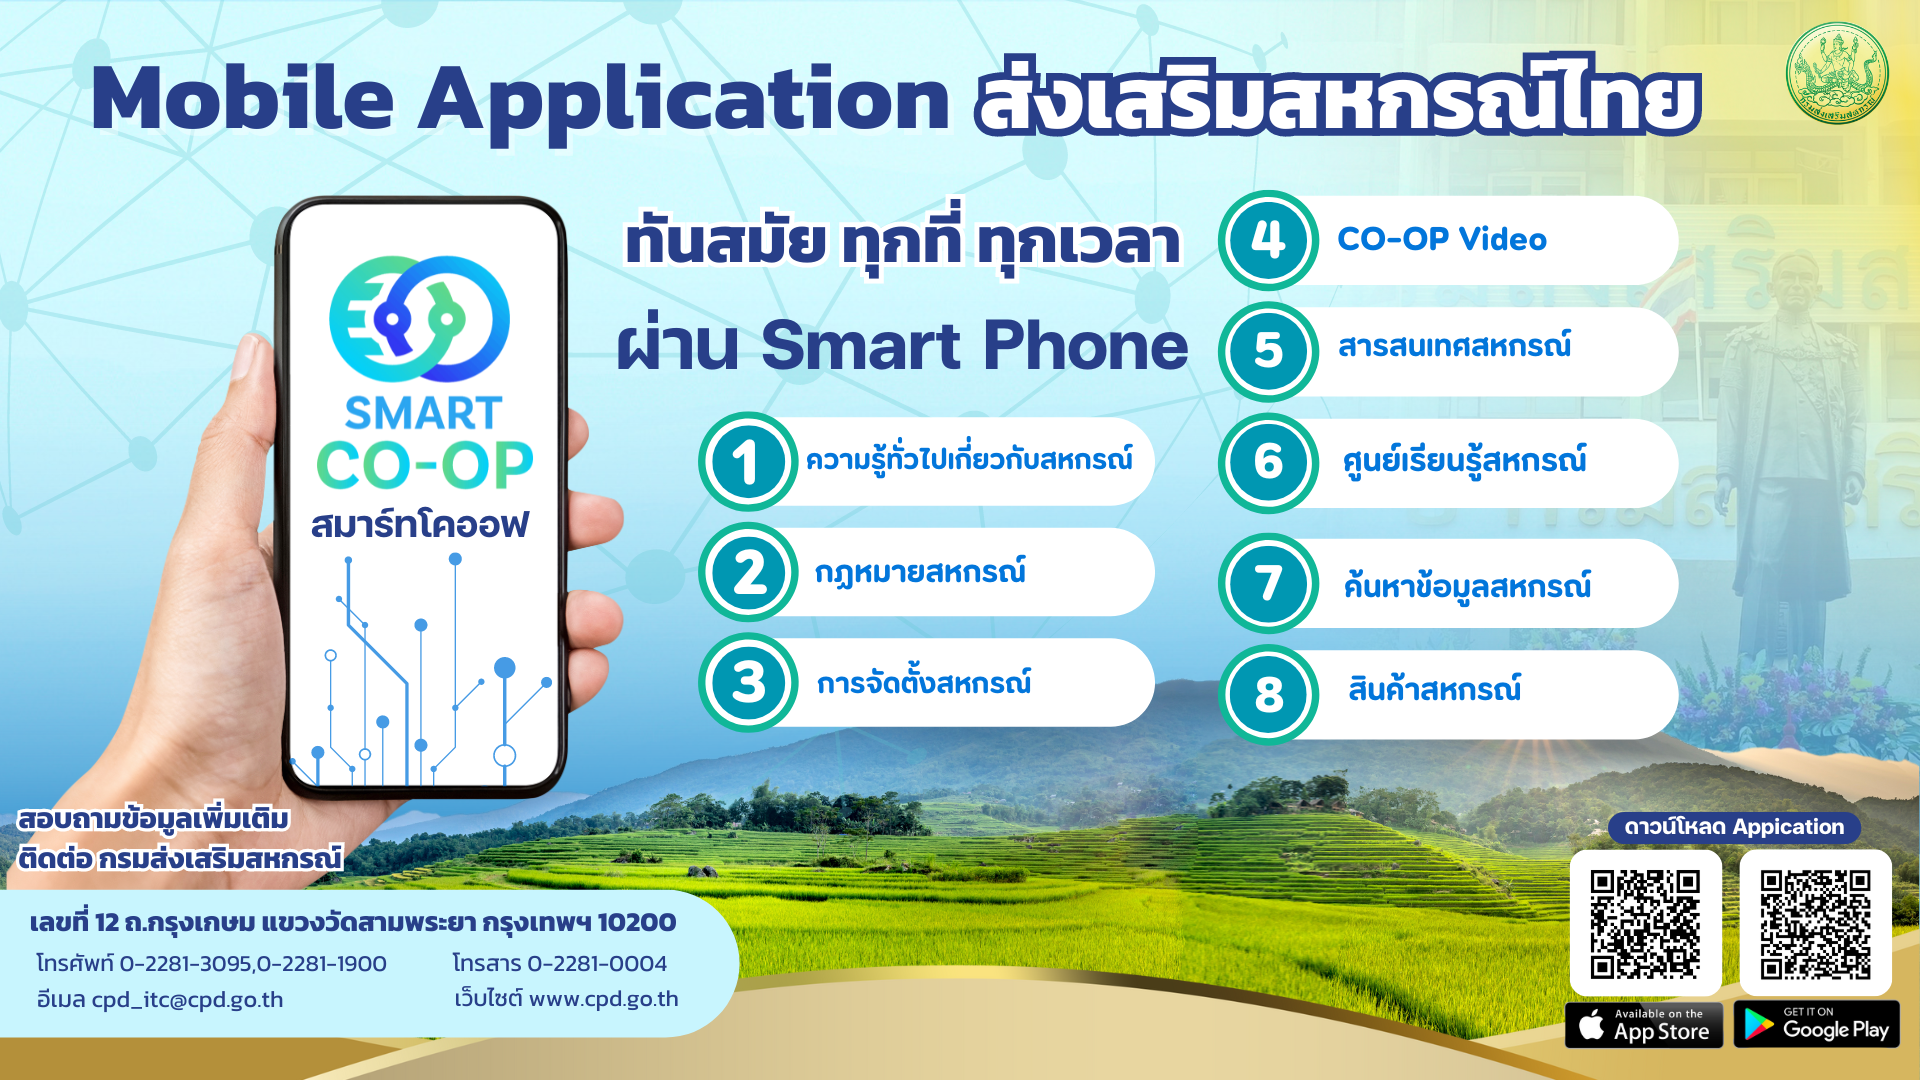 Smart Coop  ส่งเสริมสหกรณ์ไทย ทันสมัย ทุกที่ ทุกเวลา ผ่าน Smart Phone